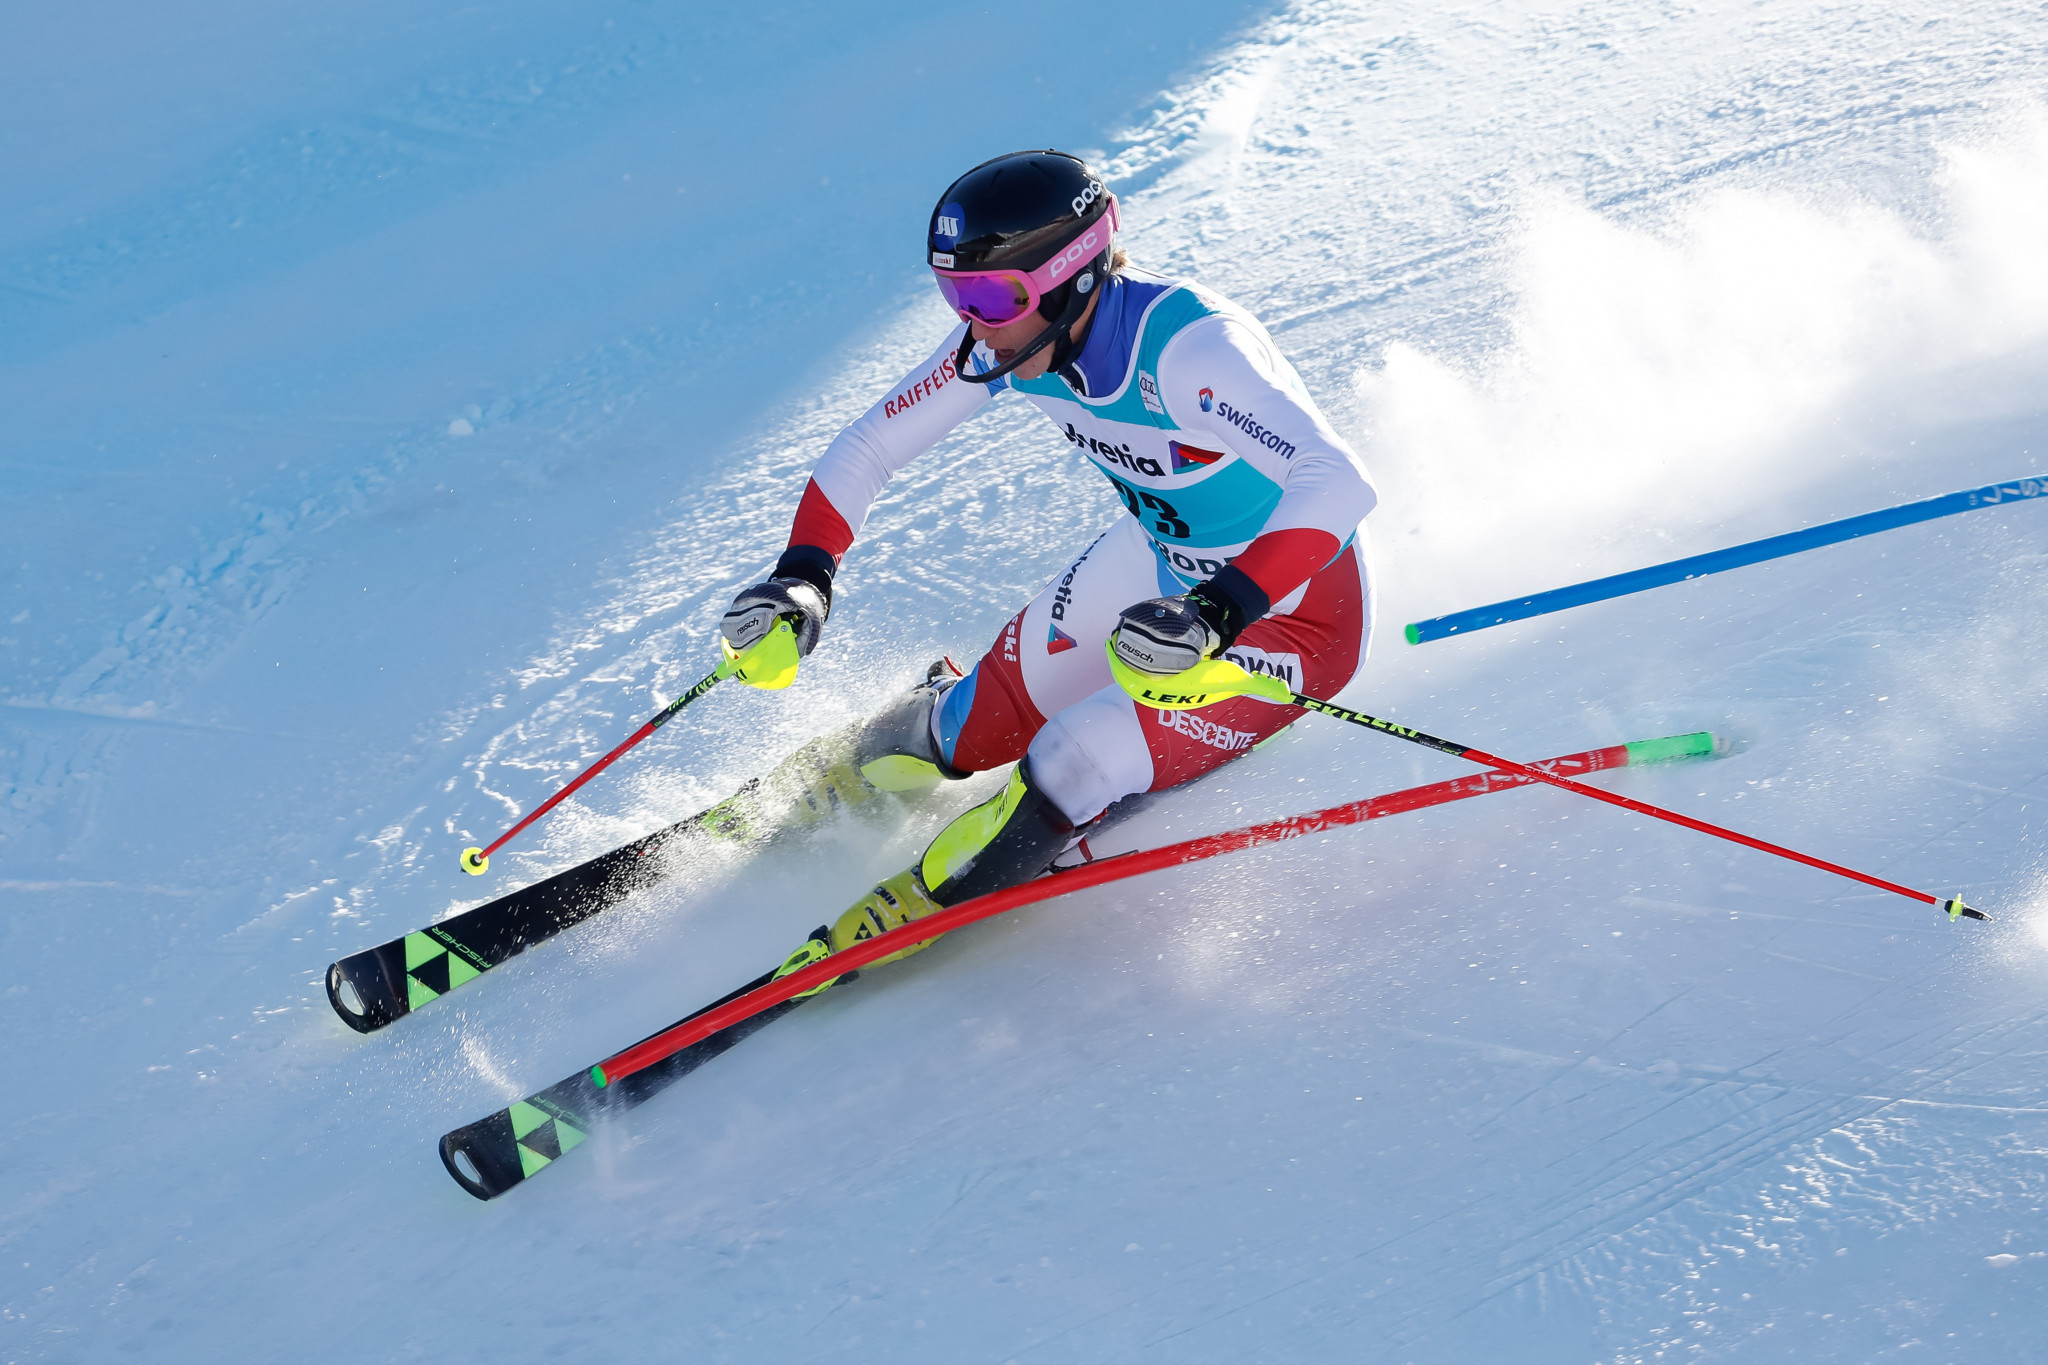 Switzerland's Alpine skier Tanguy Nef has been announced as the winner of the International Matteo Baumgarten Award ©Getty Images